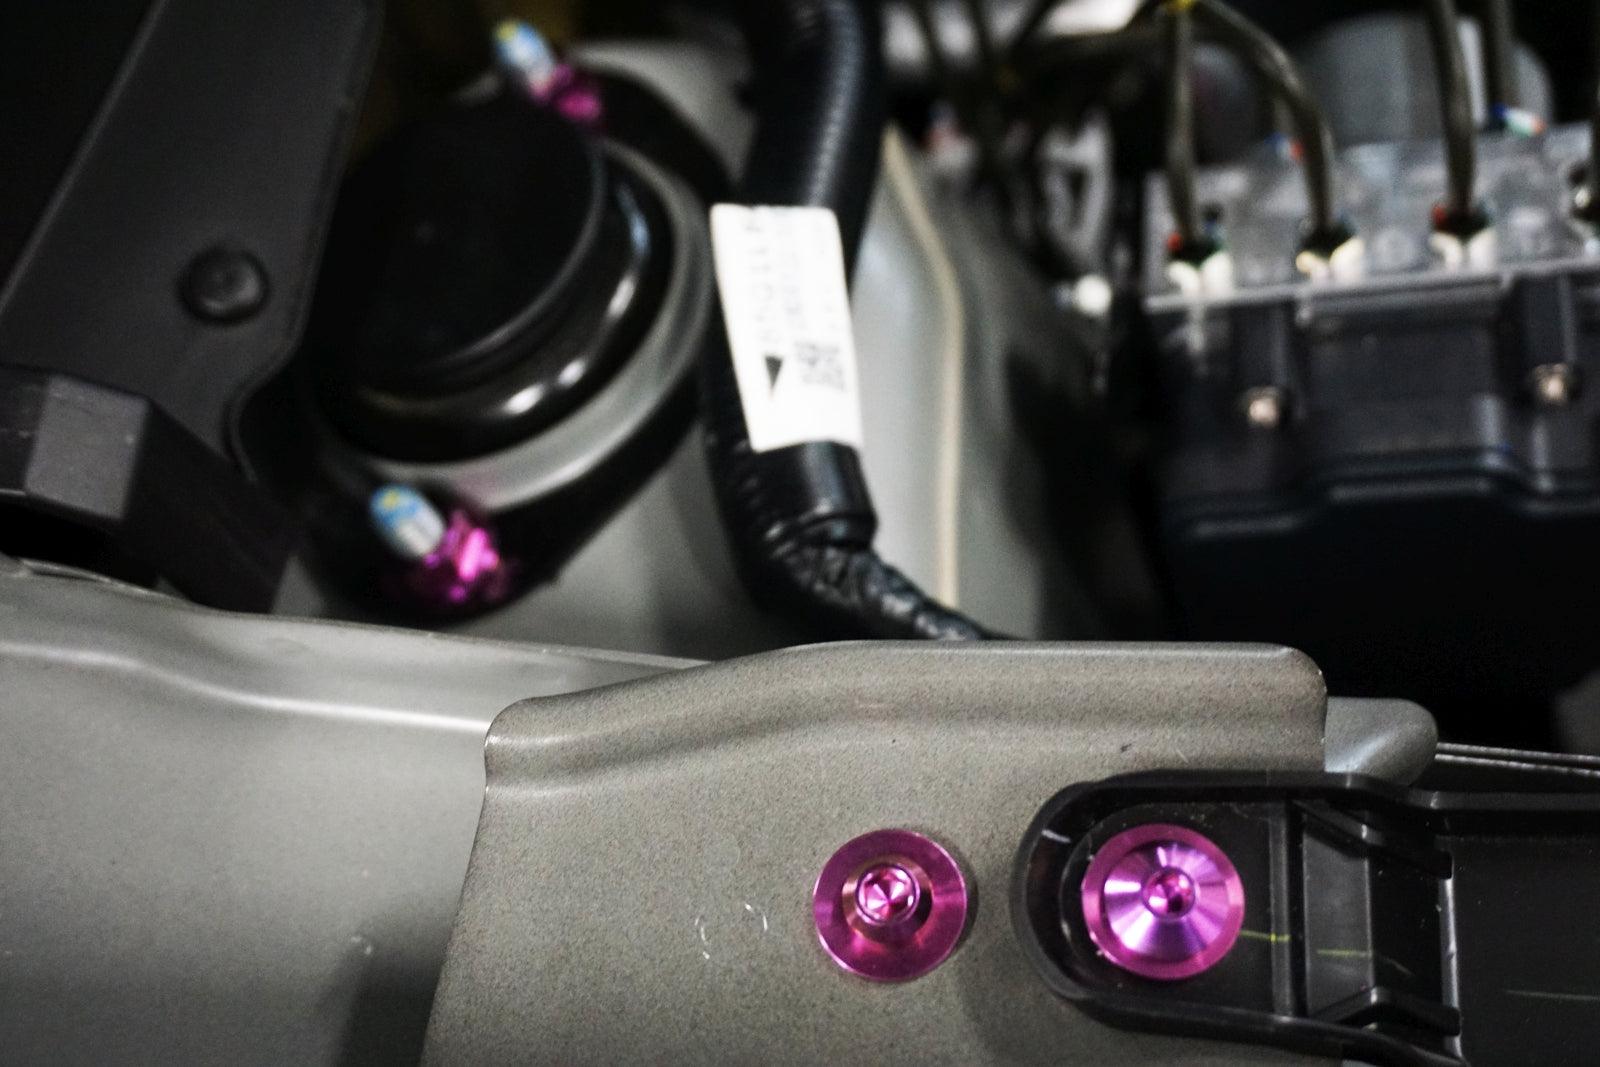 ZSPEC "Stage 3" Dress Up Bolts® Fastener Kit for Mitsubishi Mirage 2023 Titanium  Keywords Engine Bay Upgrade Performance Merchandise Grade-5 GR5 Dress Up Bolts Hardware Design Car Auto JDM USDM